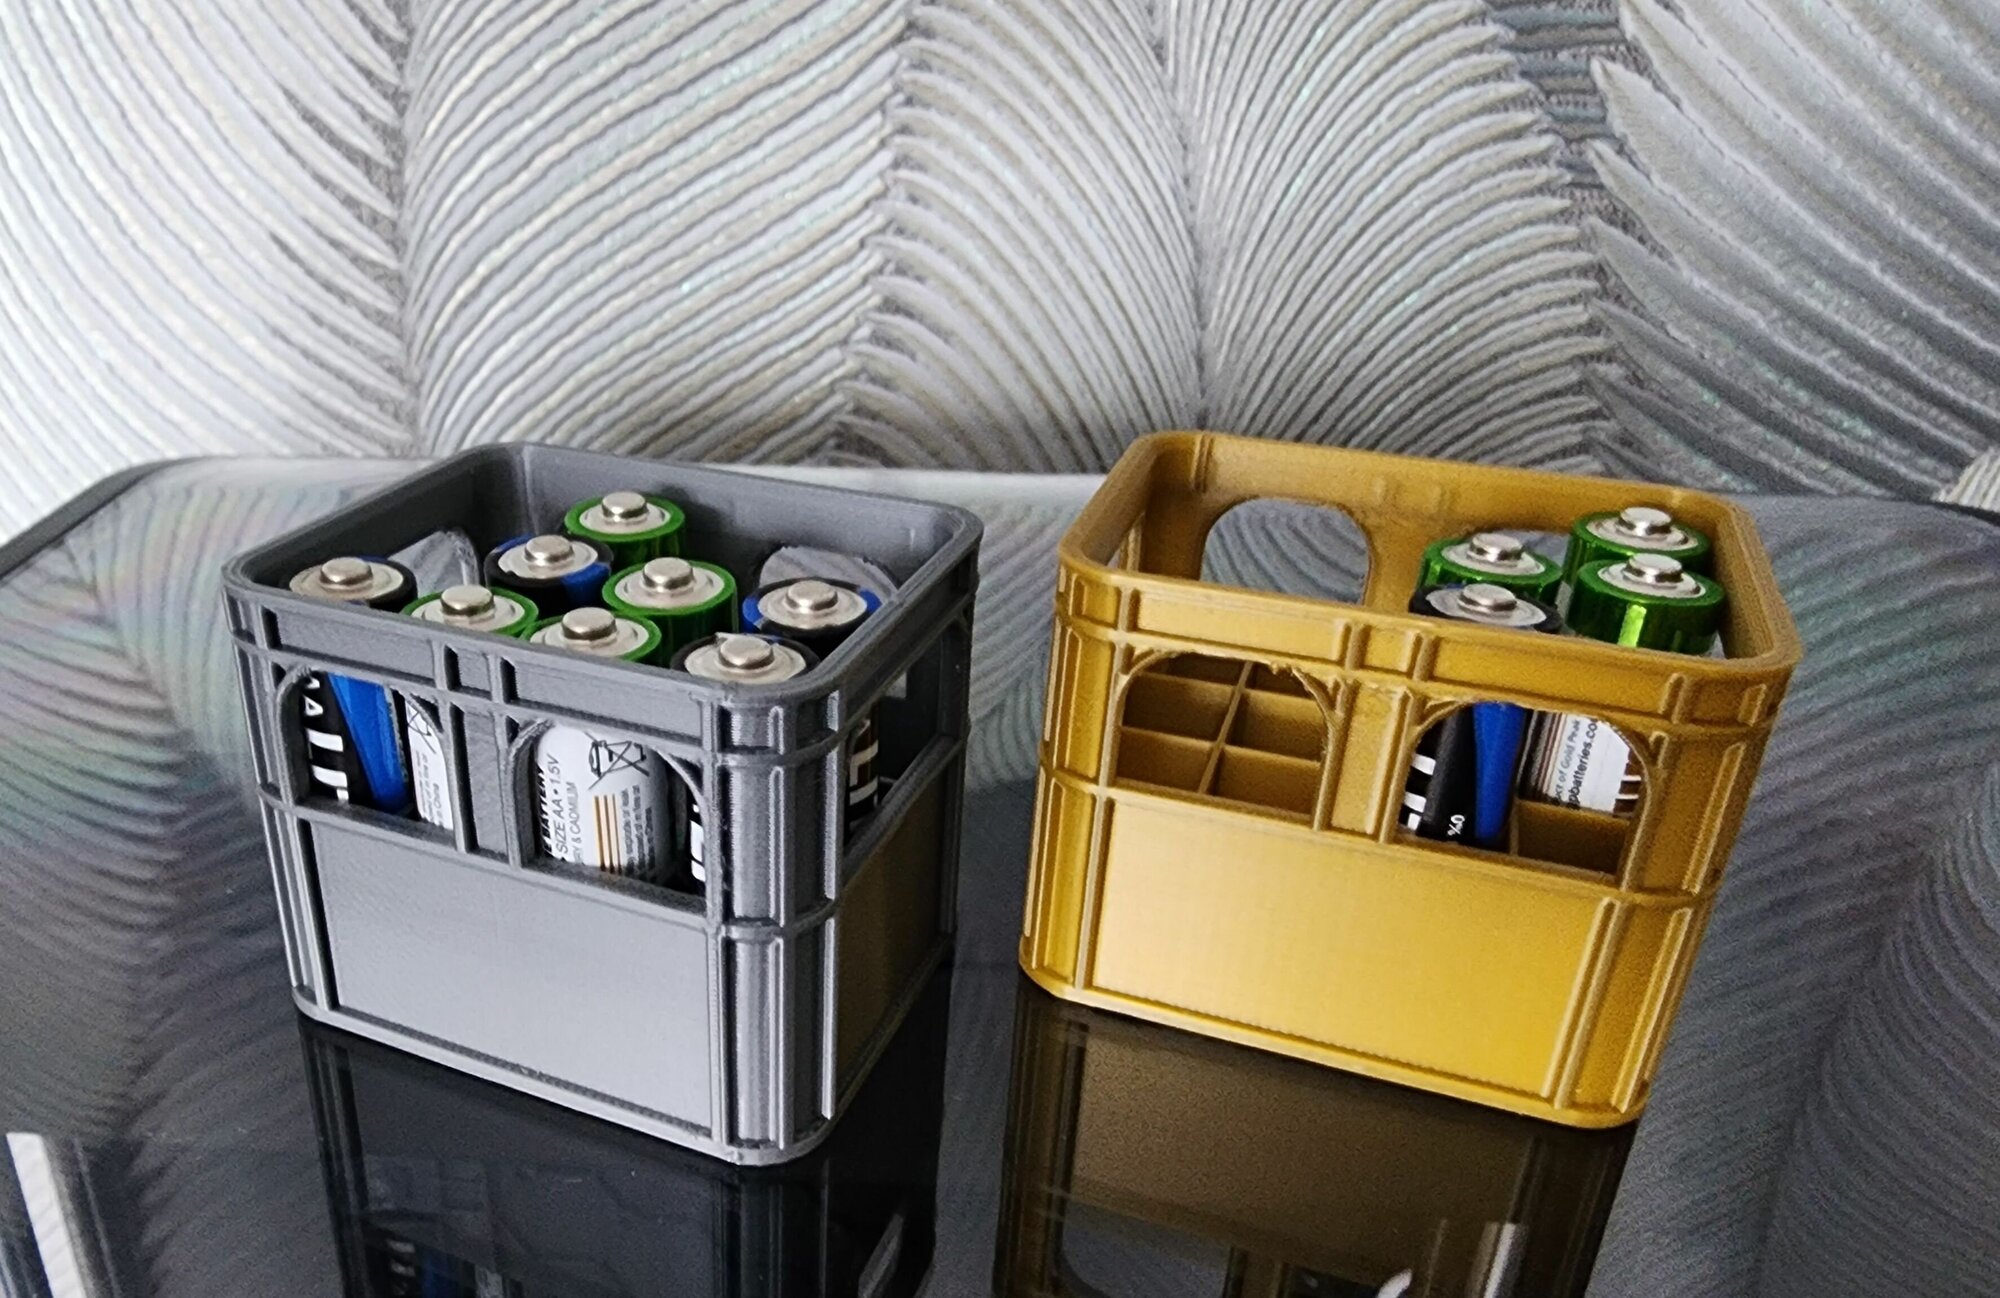 Органайзер/контейнер для хранения батареек типа АА, серебристый, 12 секций - фотография № 3